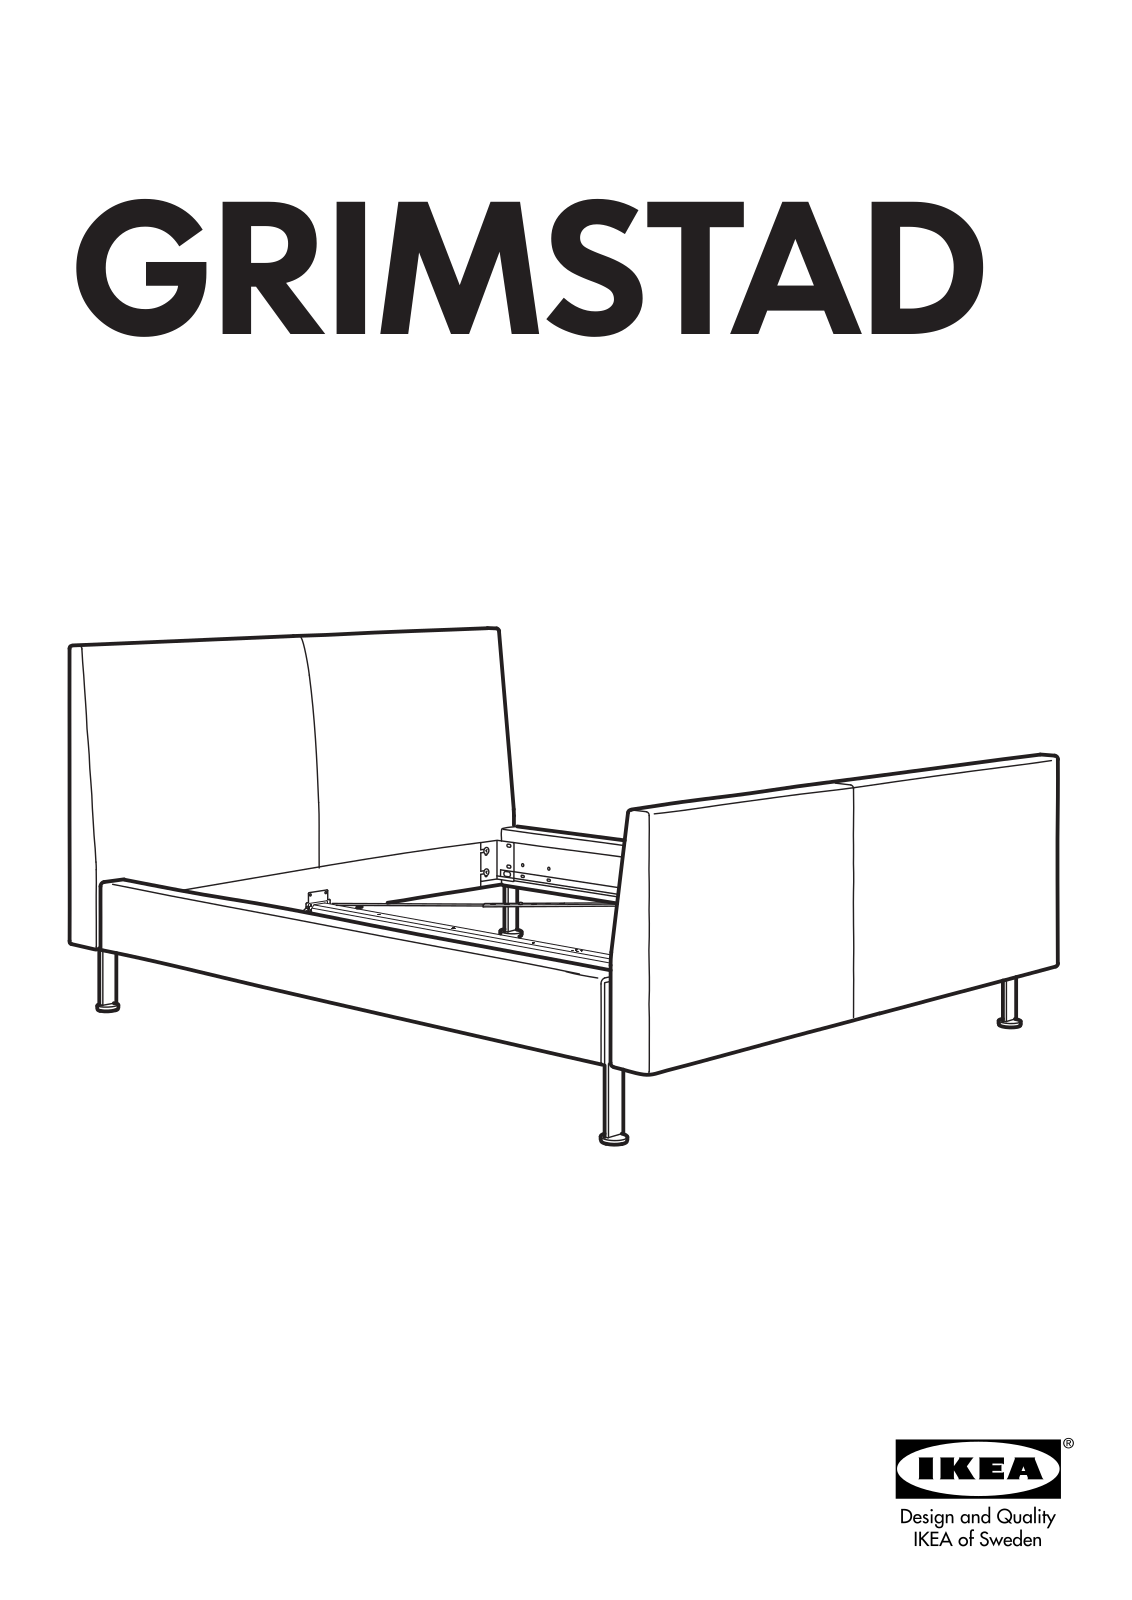 IKEA GRIMSTAD User Manual